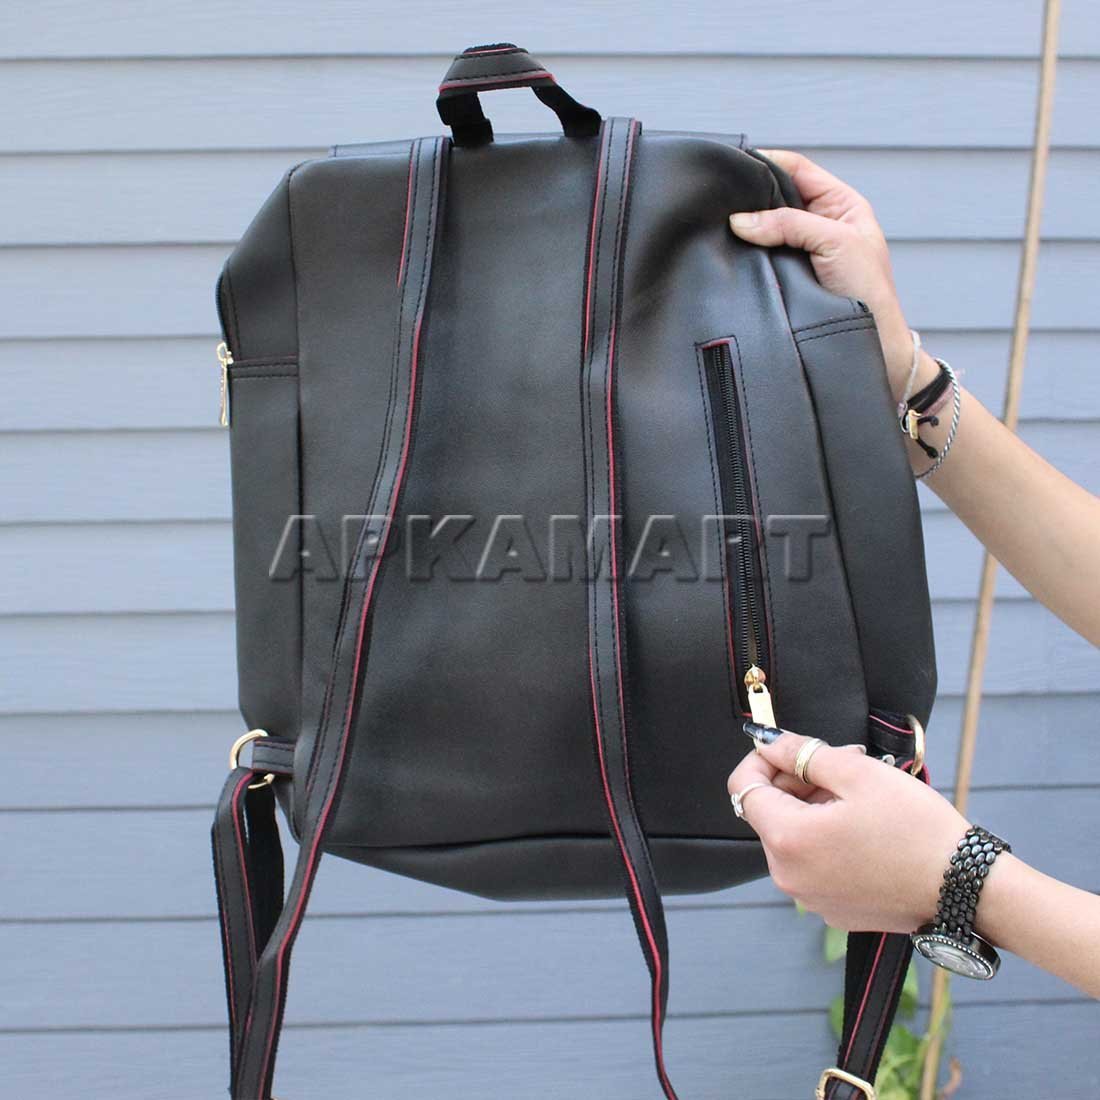 Stylish Backpack Bag - for Women, Girls -16 Inch - ApkaMart